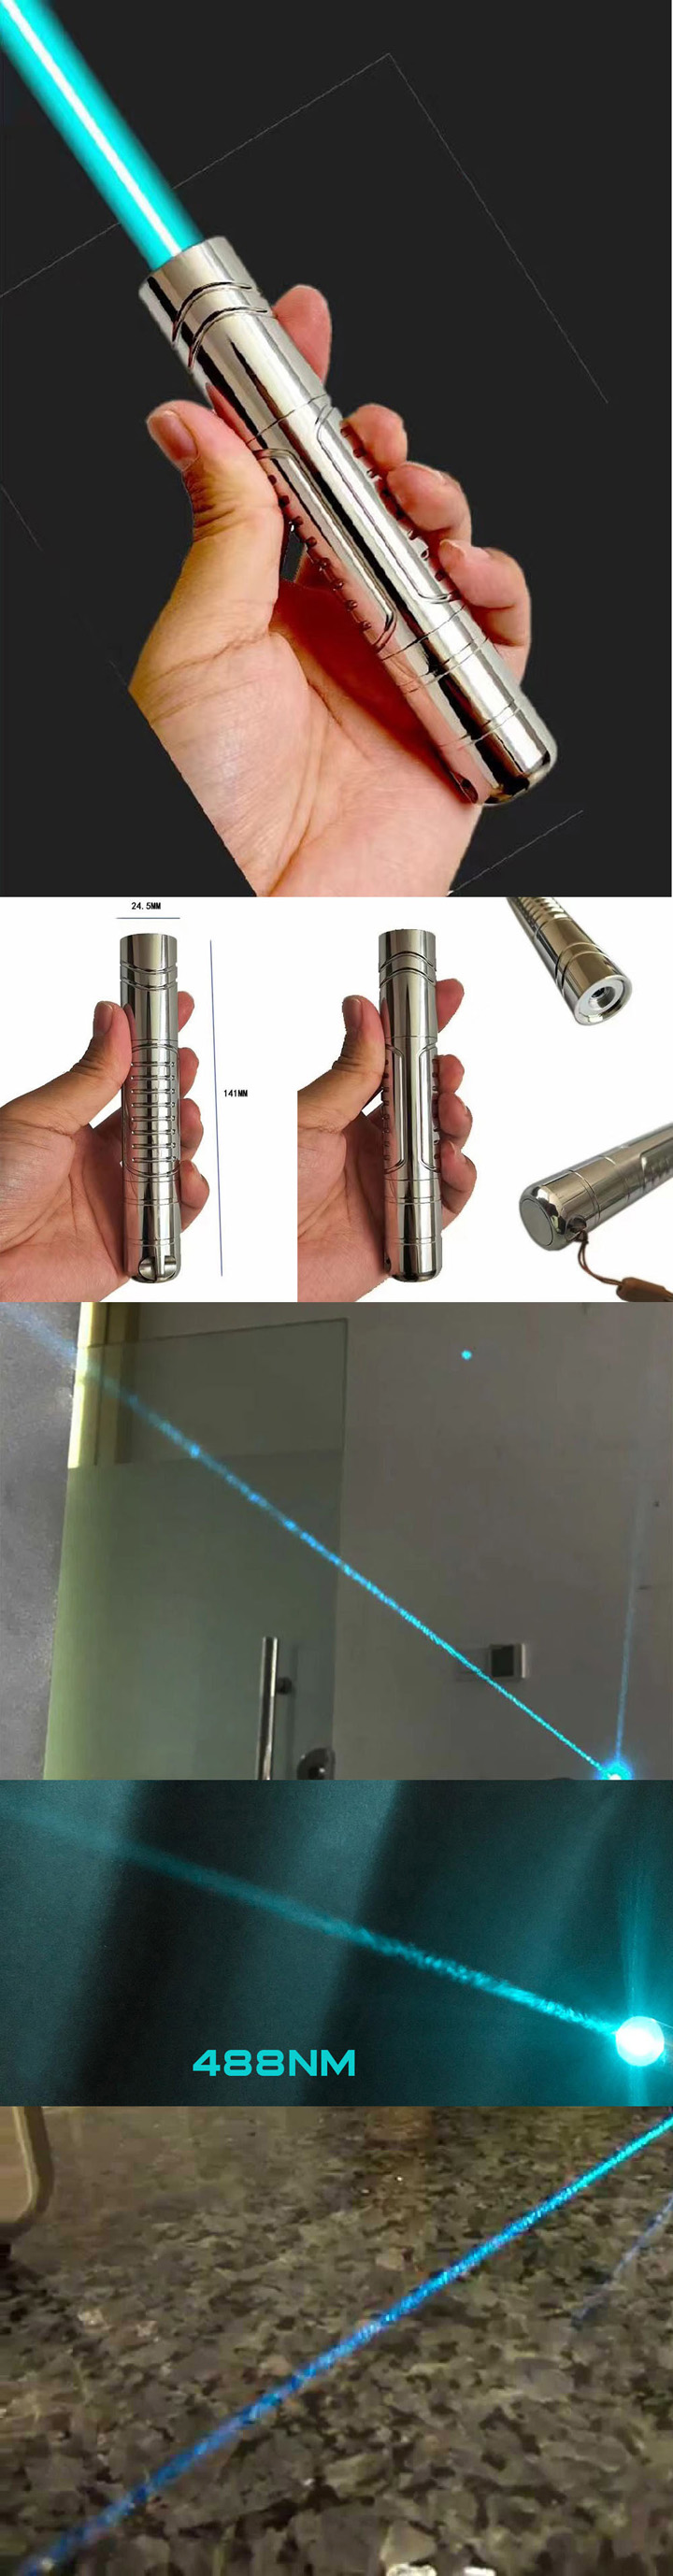 Pointeur laser cyan 488nm